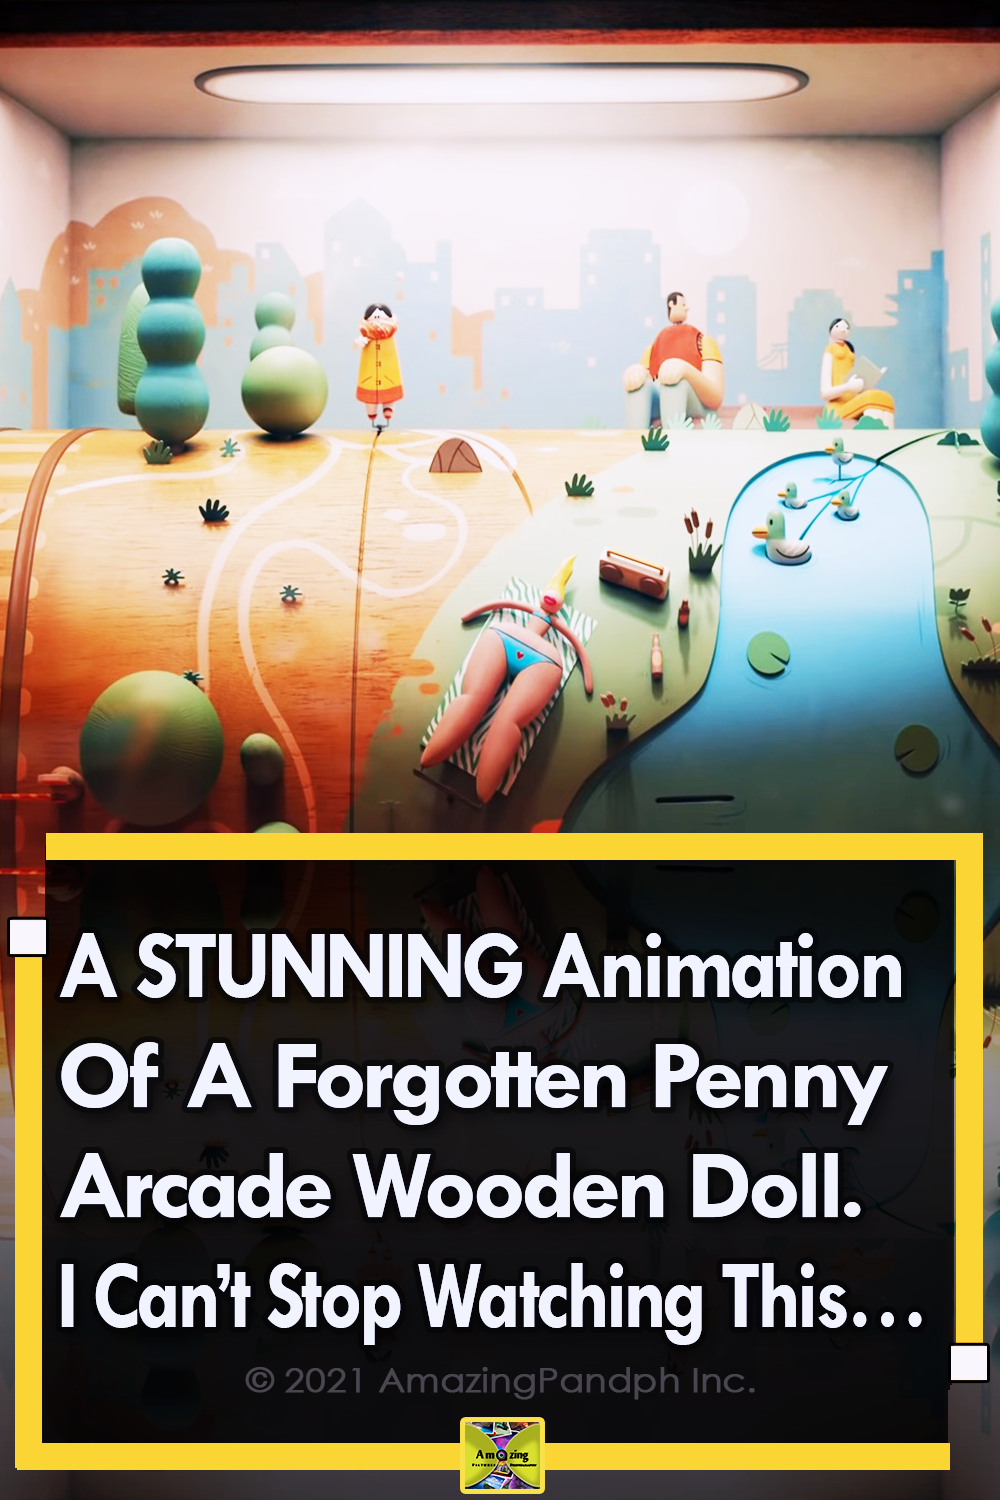 animation, music, wooden doll, arcade, amazing